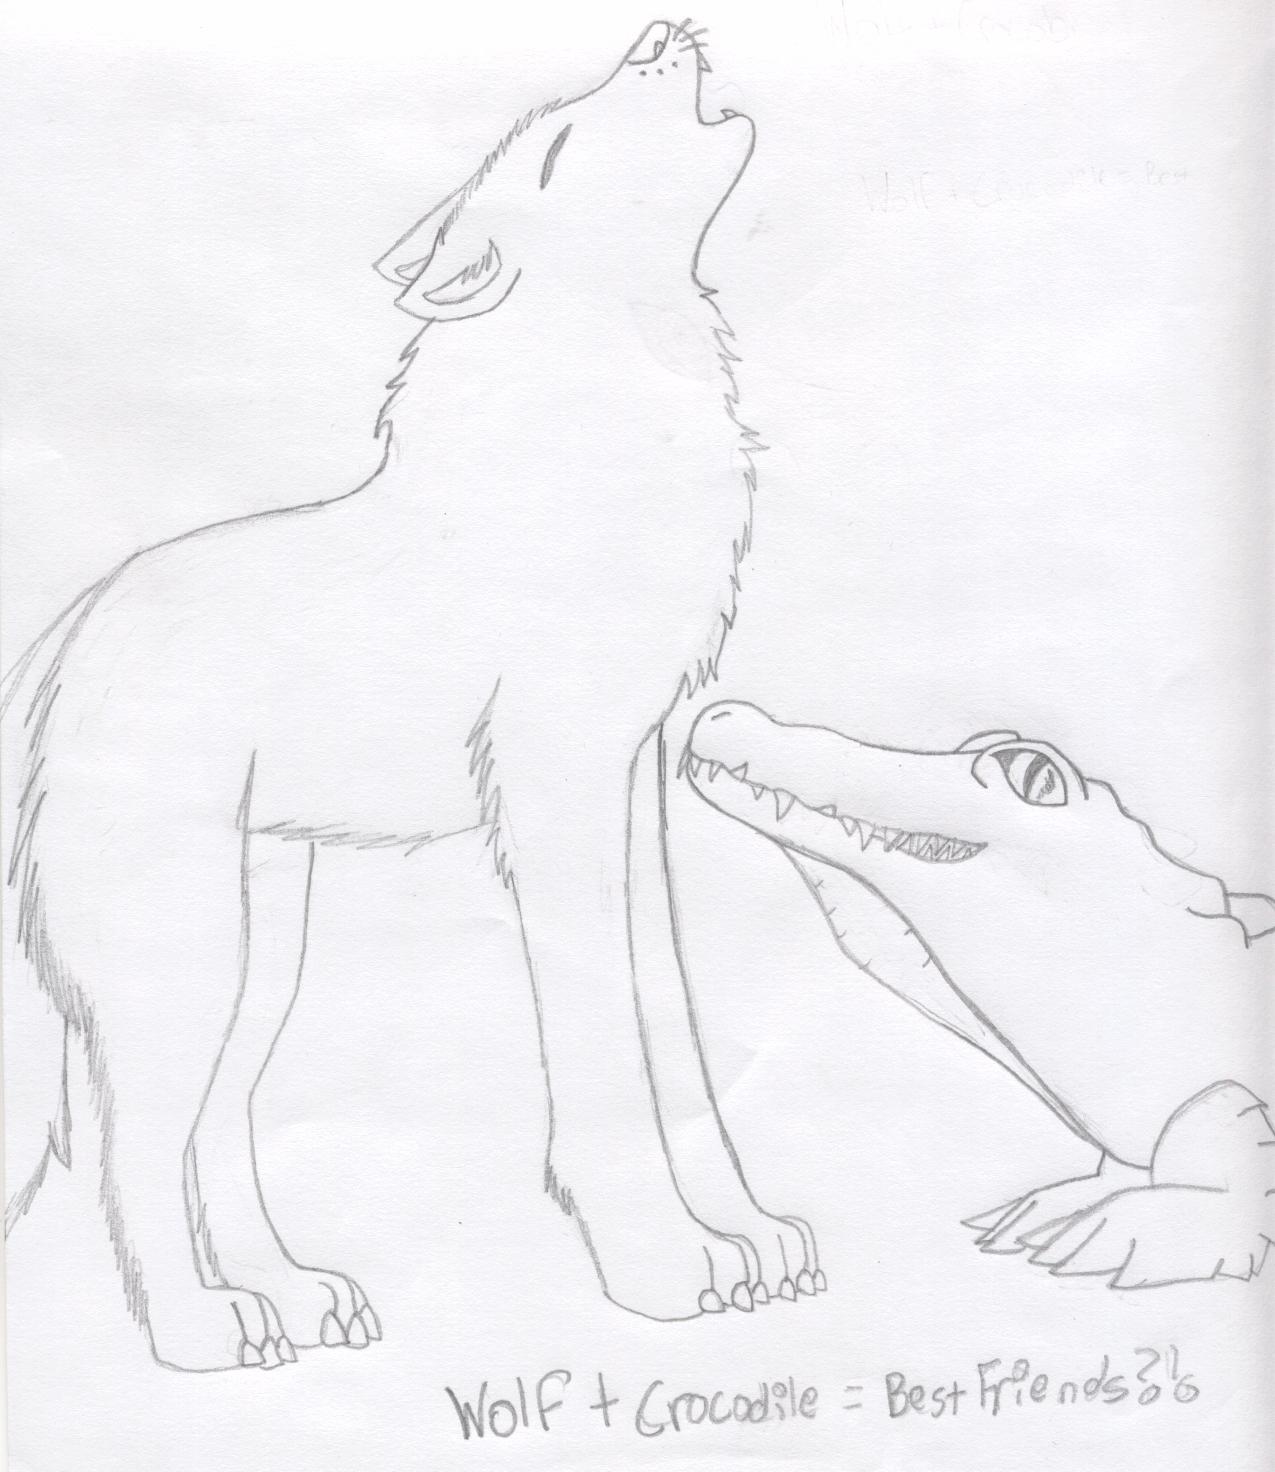 Wolf + Crocodile = Best friends?! by BlackSpiritWolf